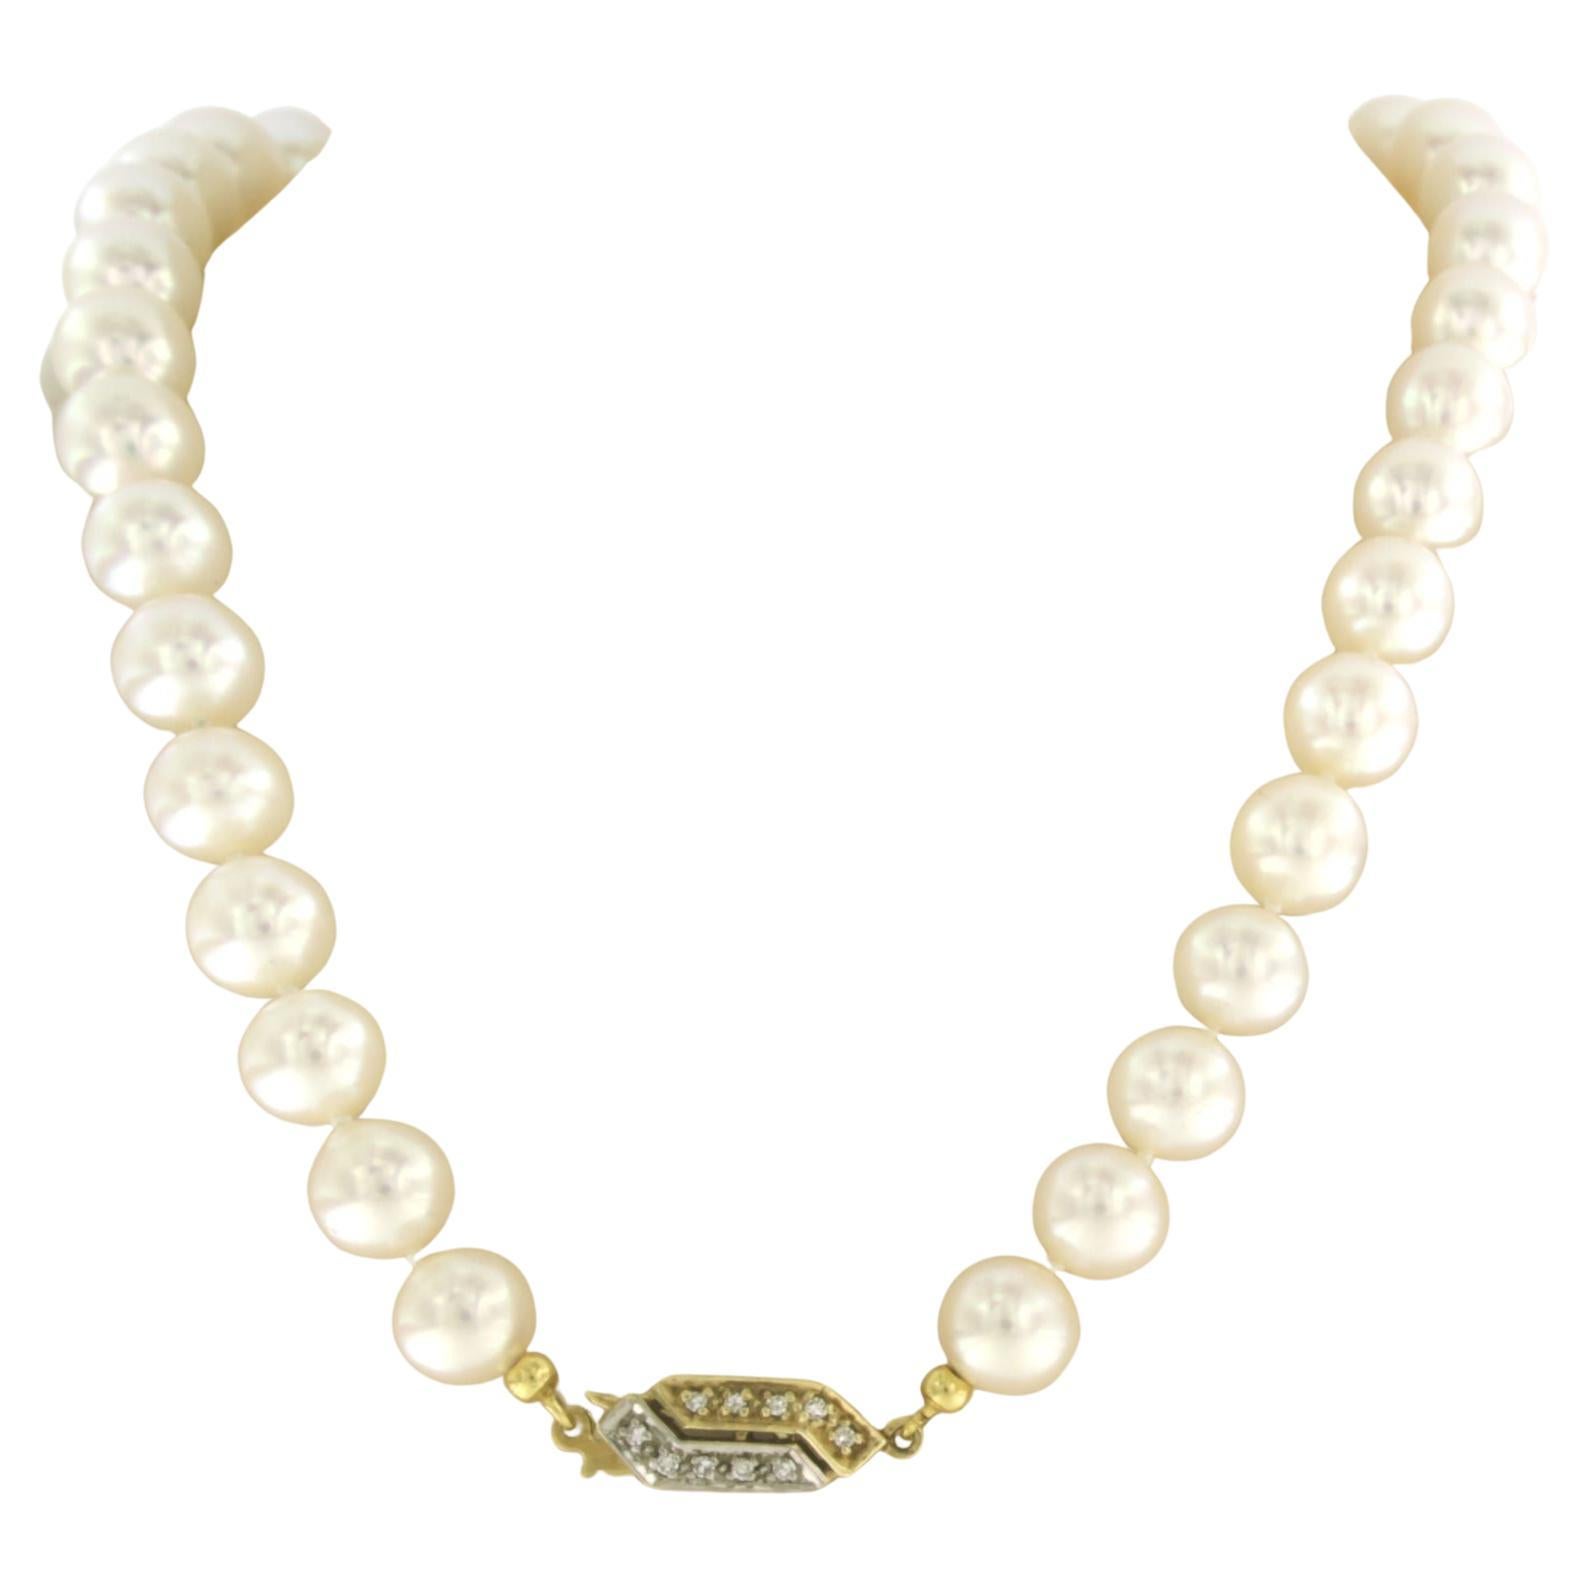 Collier de perles avec serrure sertie de diamants Or bicolore 14k